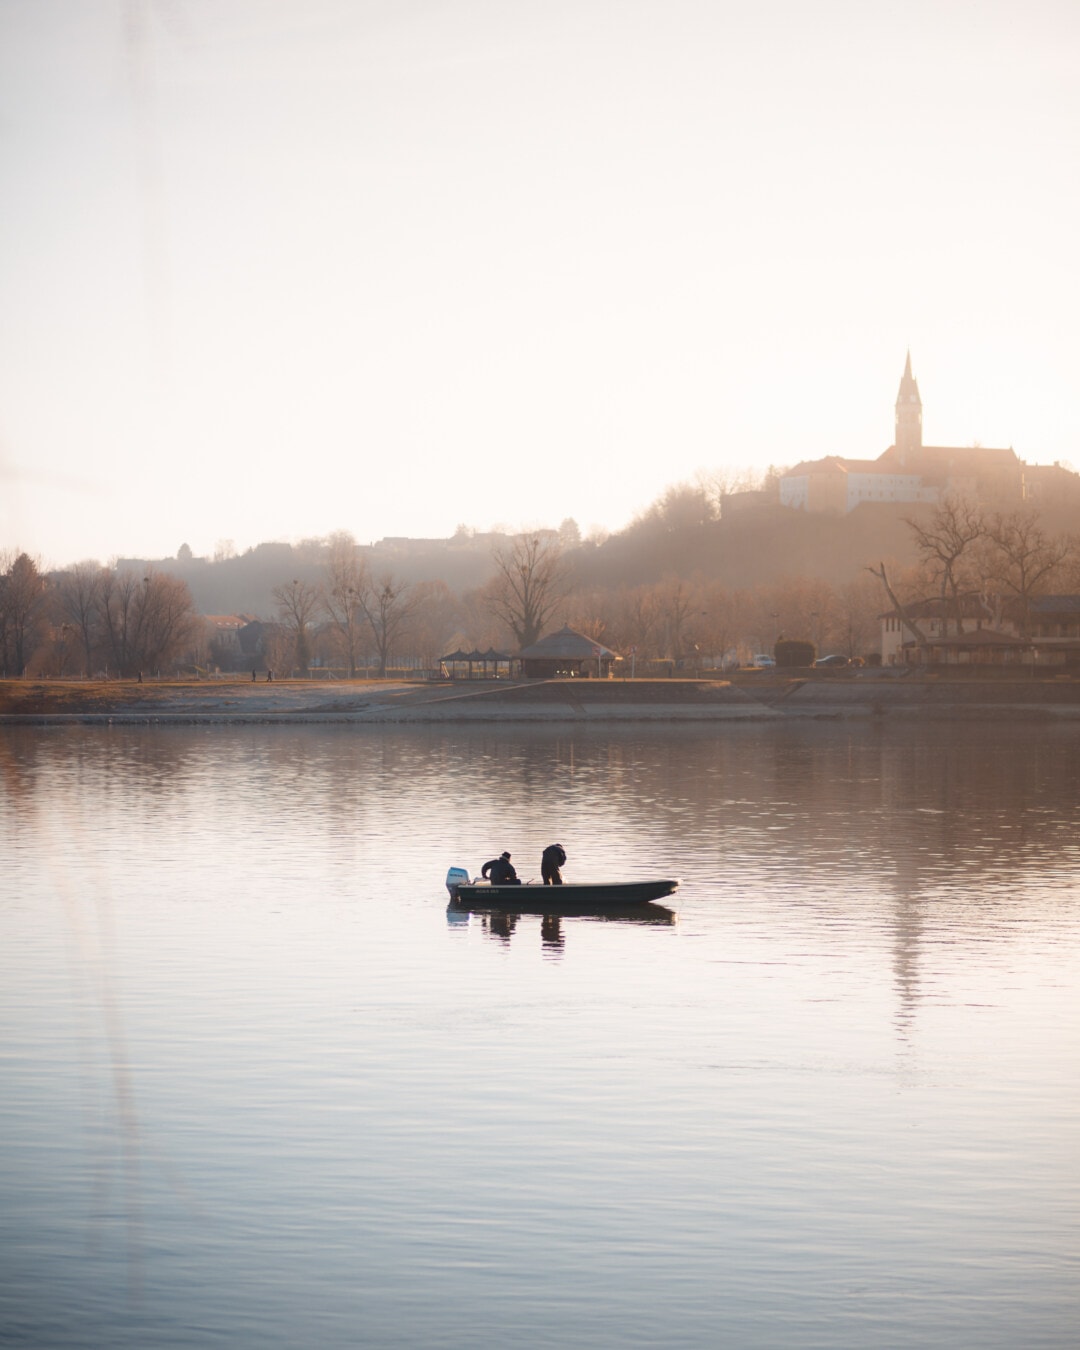 fisherman, river, men, boat, mist, morning, dawn, water, reflection, fog